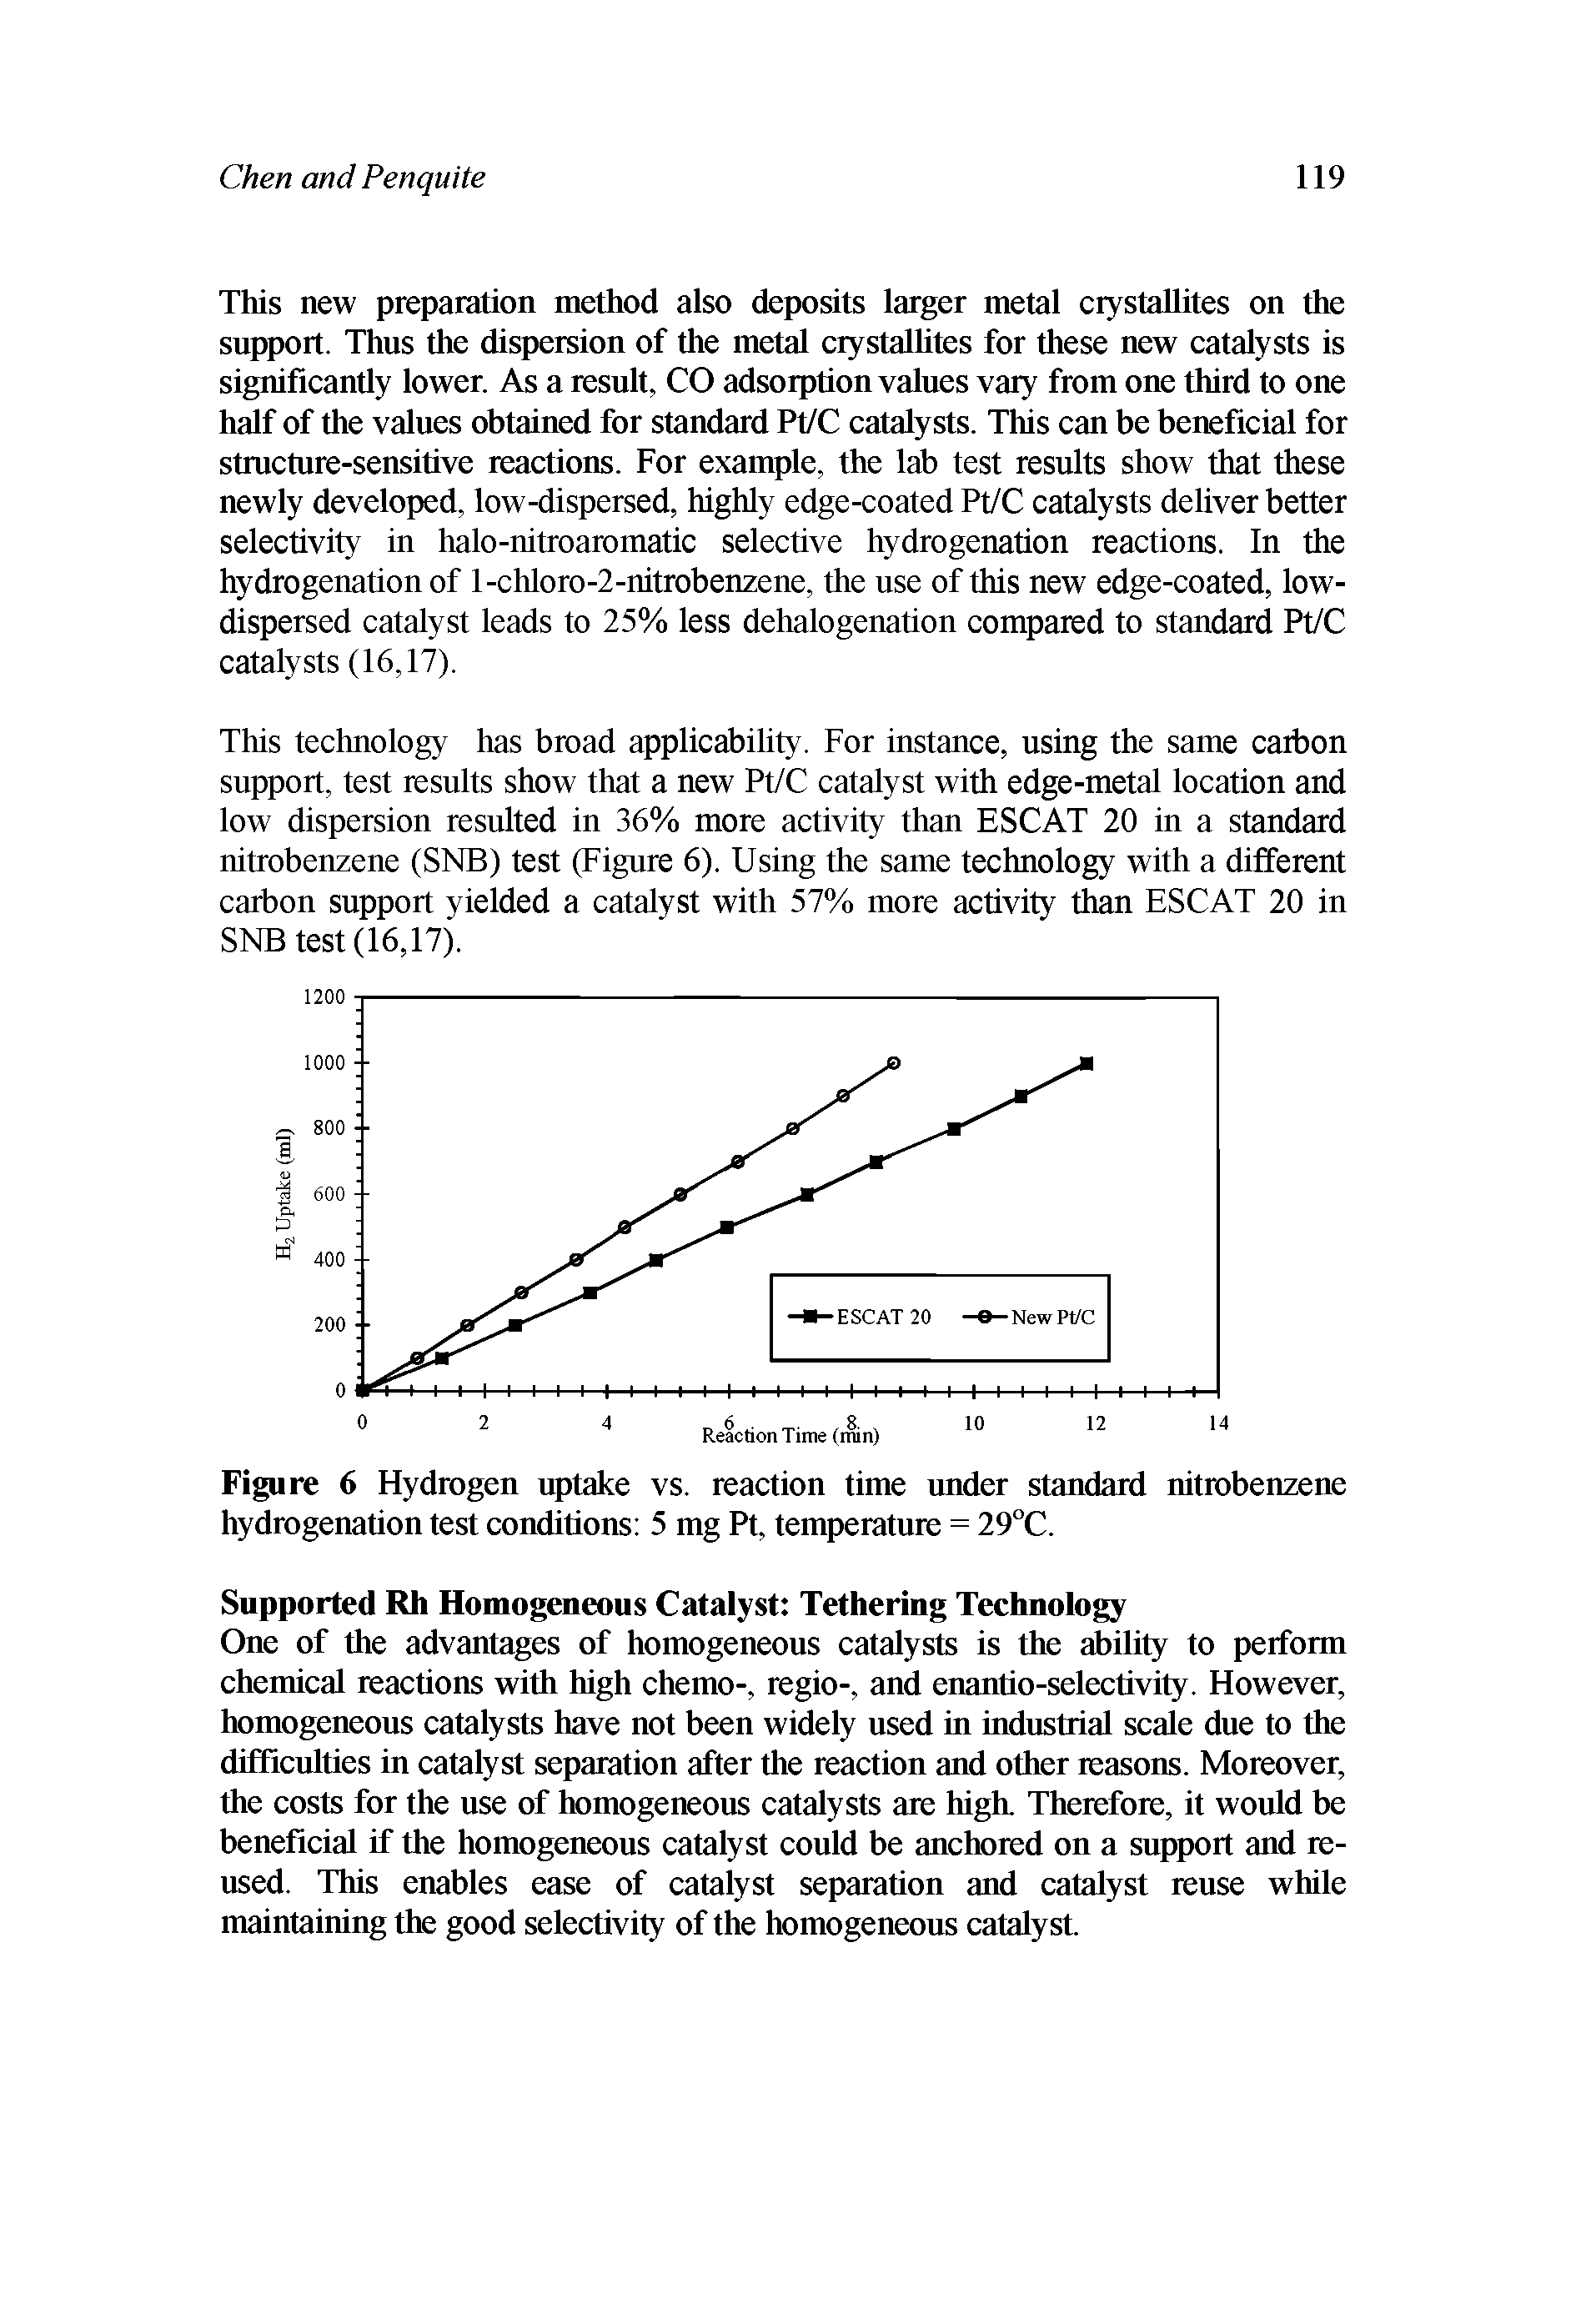 Figure 6 Hydrogen uptake vs. reaction time under standard nitrobenzene hydrogenation test conditions 5 mg Pt, temperature = 29°C.